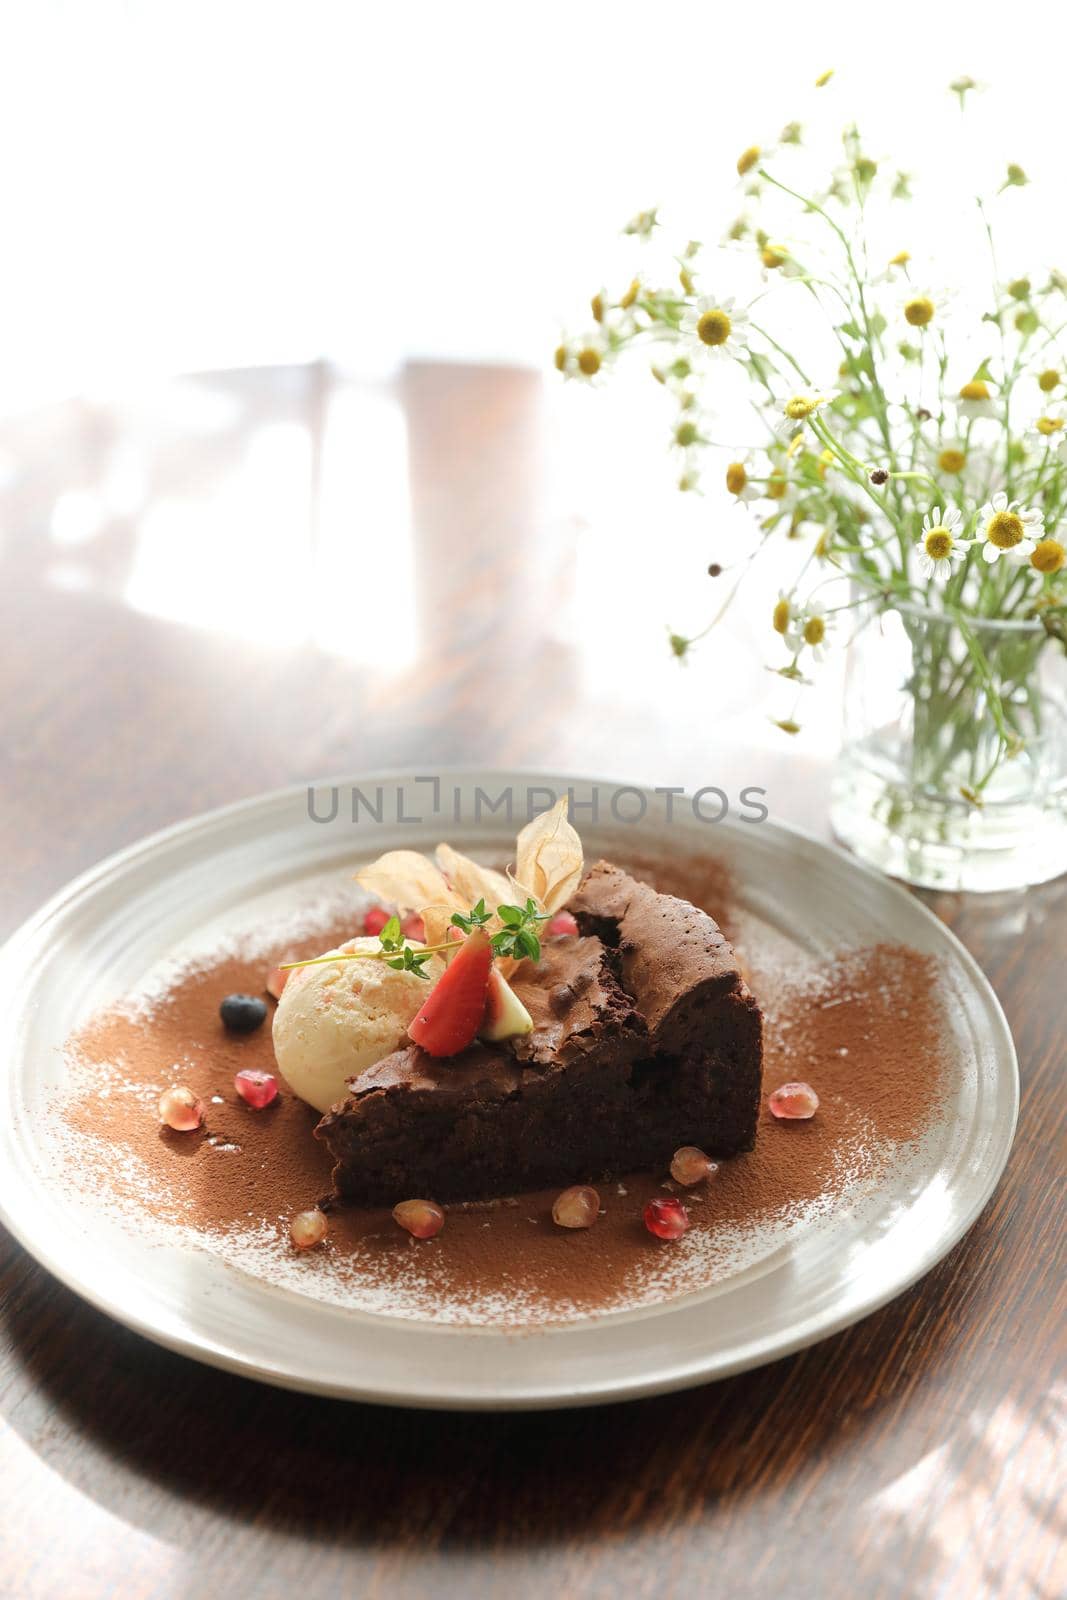 Chocolate cake with ice cream dessert on wood table  by piyato